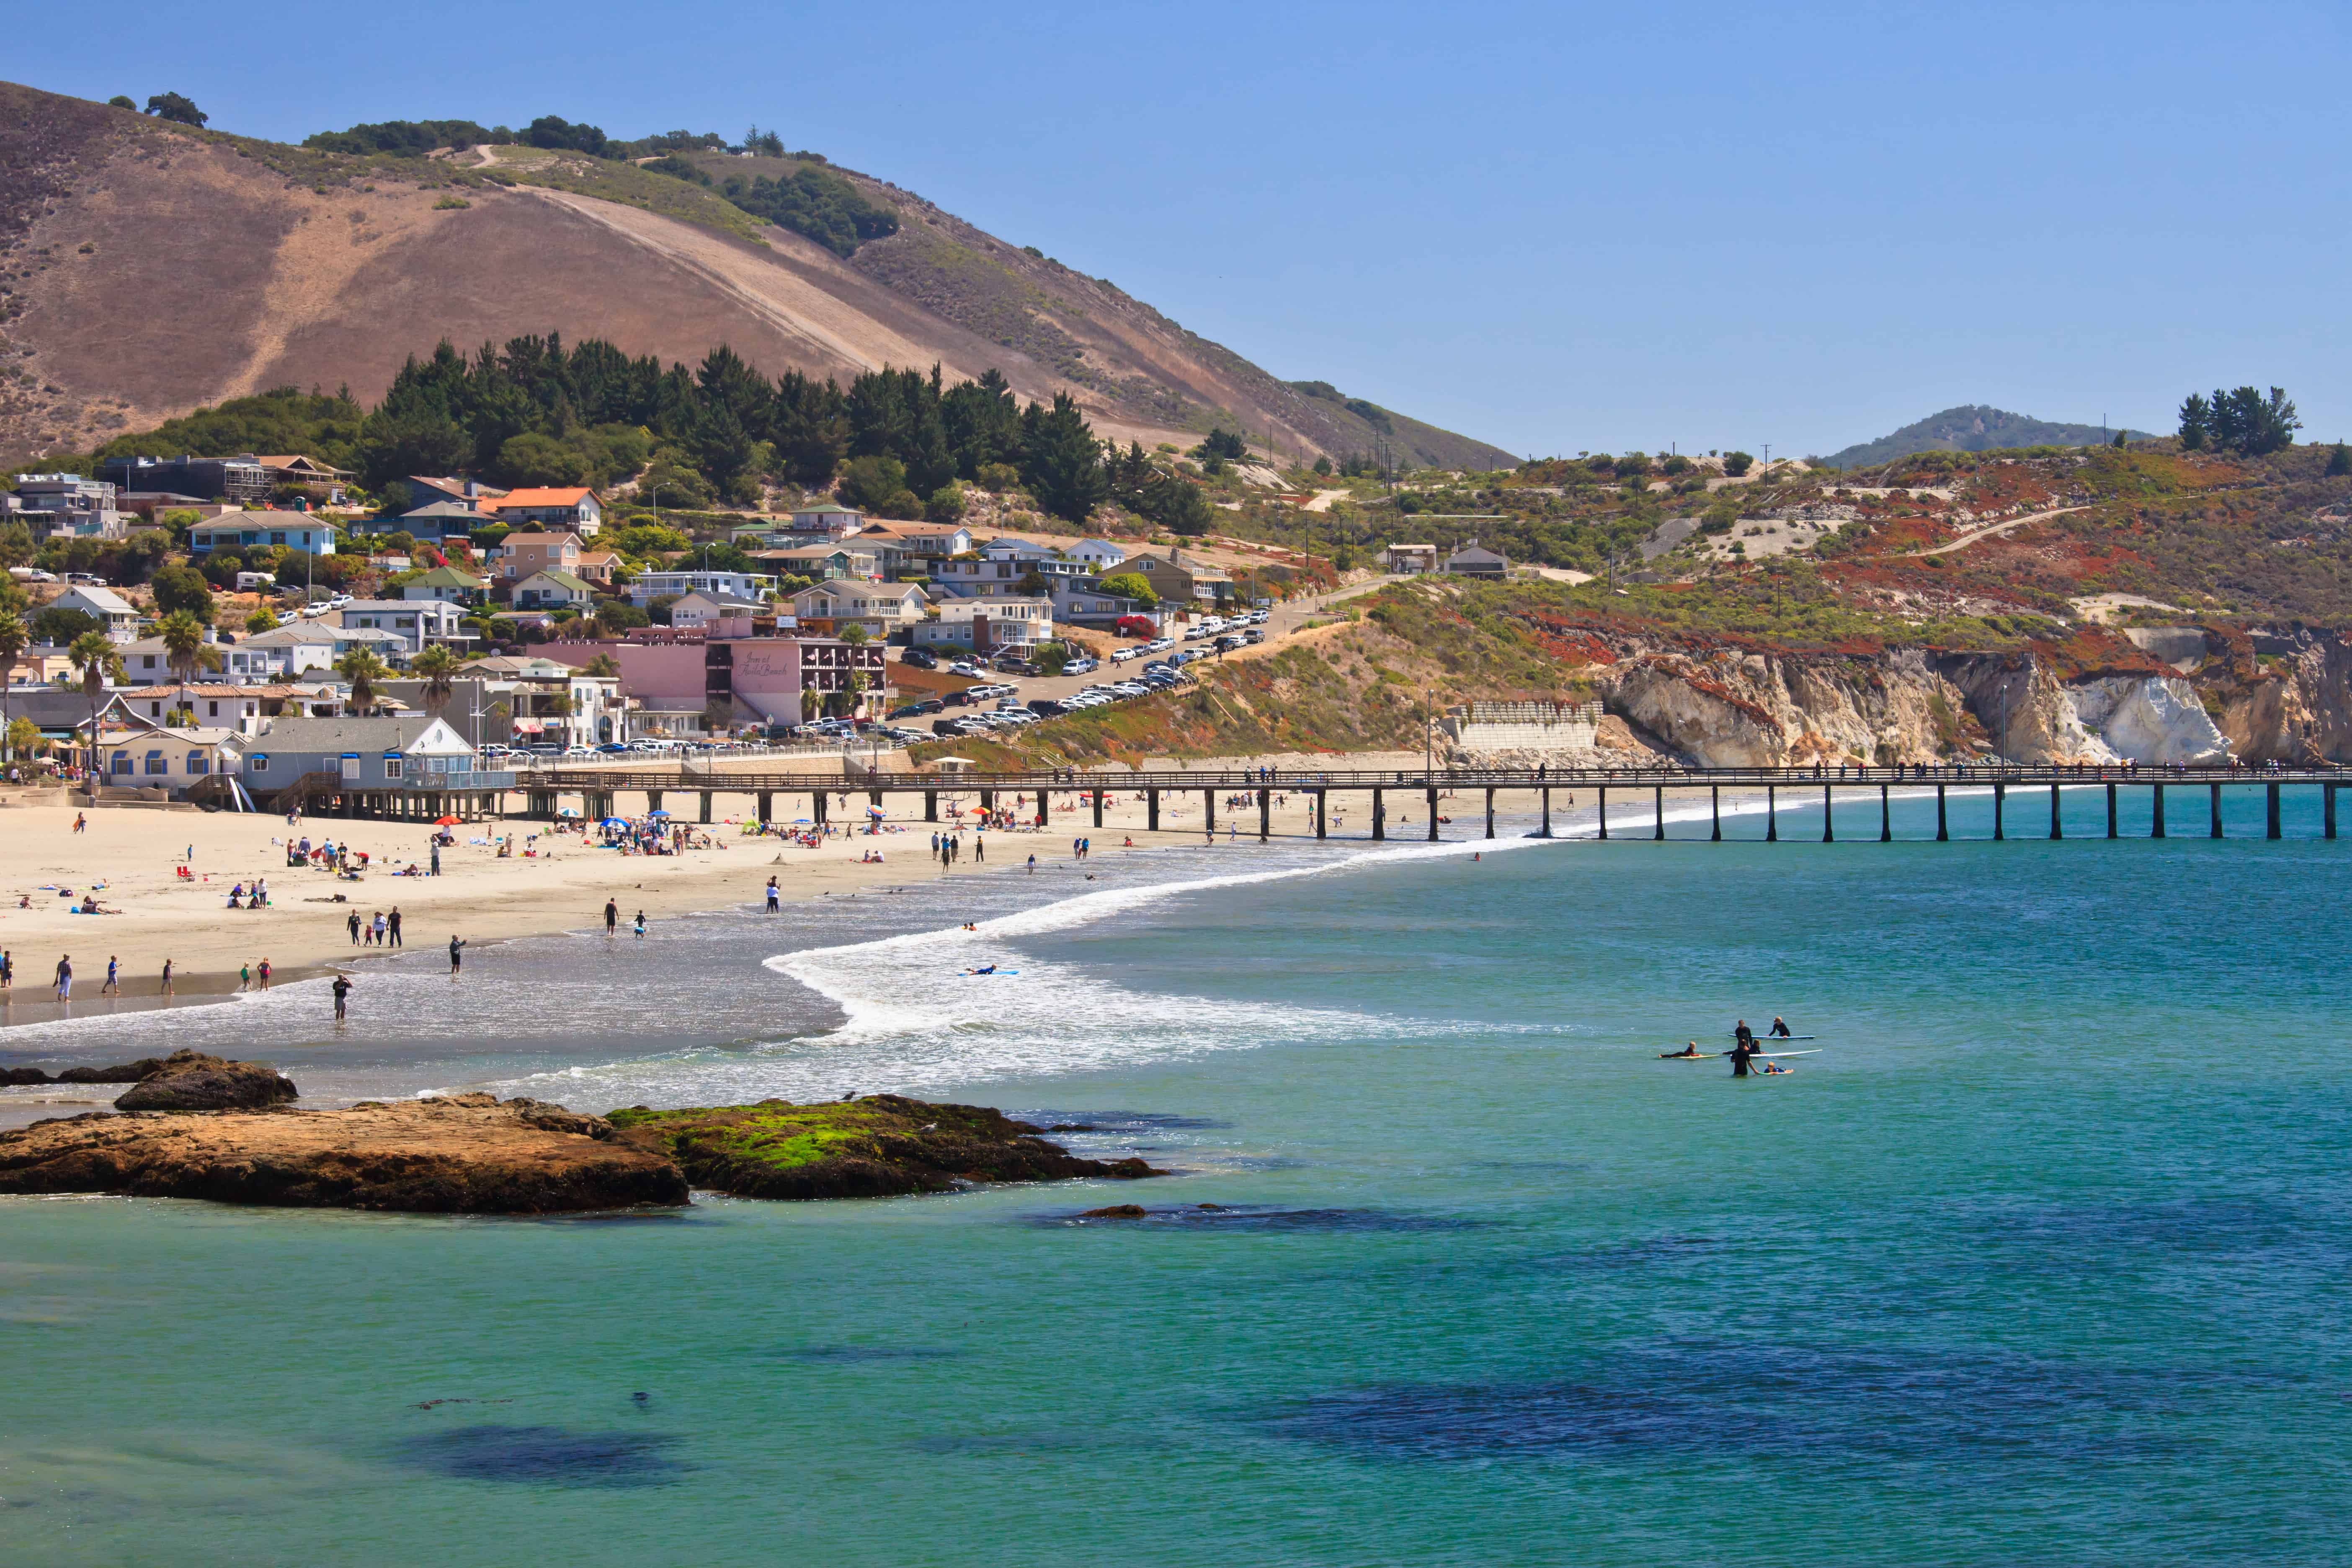 View of Avila Beach boardwalk and coastline in California